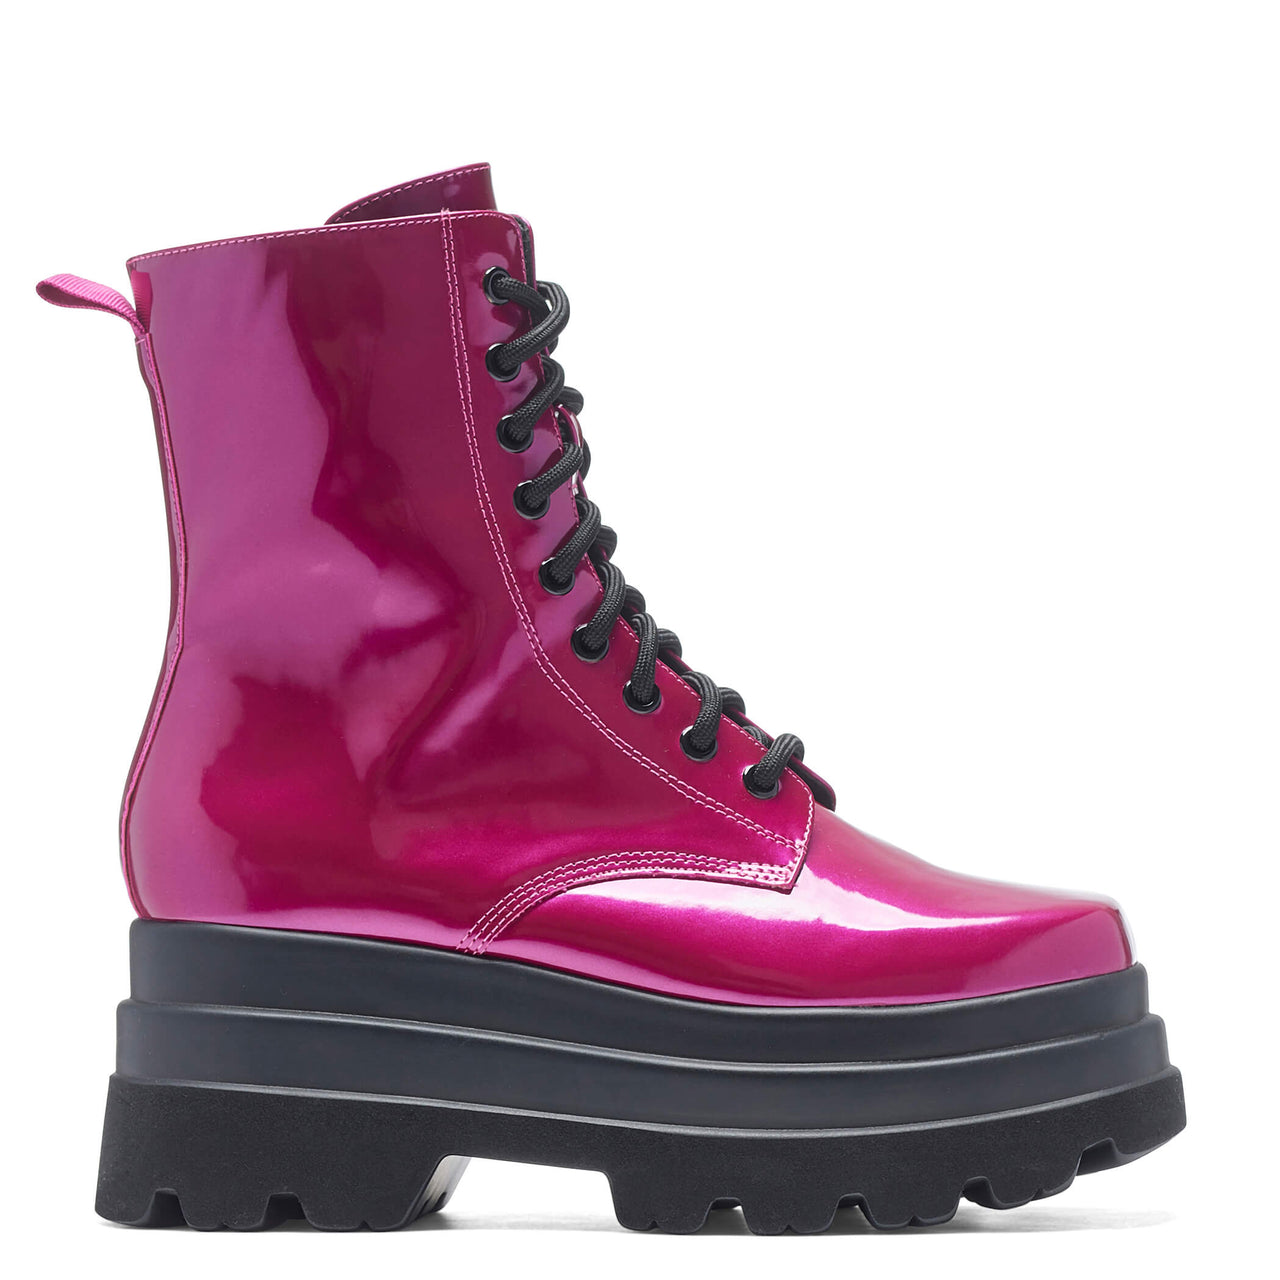 Deathwatch Trident Platform Boots - Candy Pink